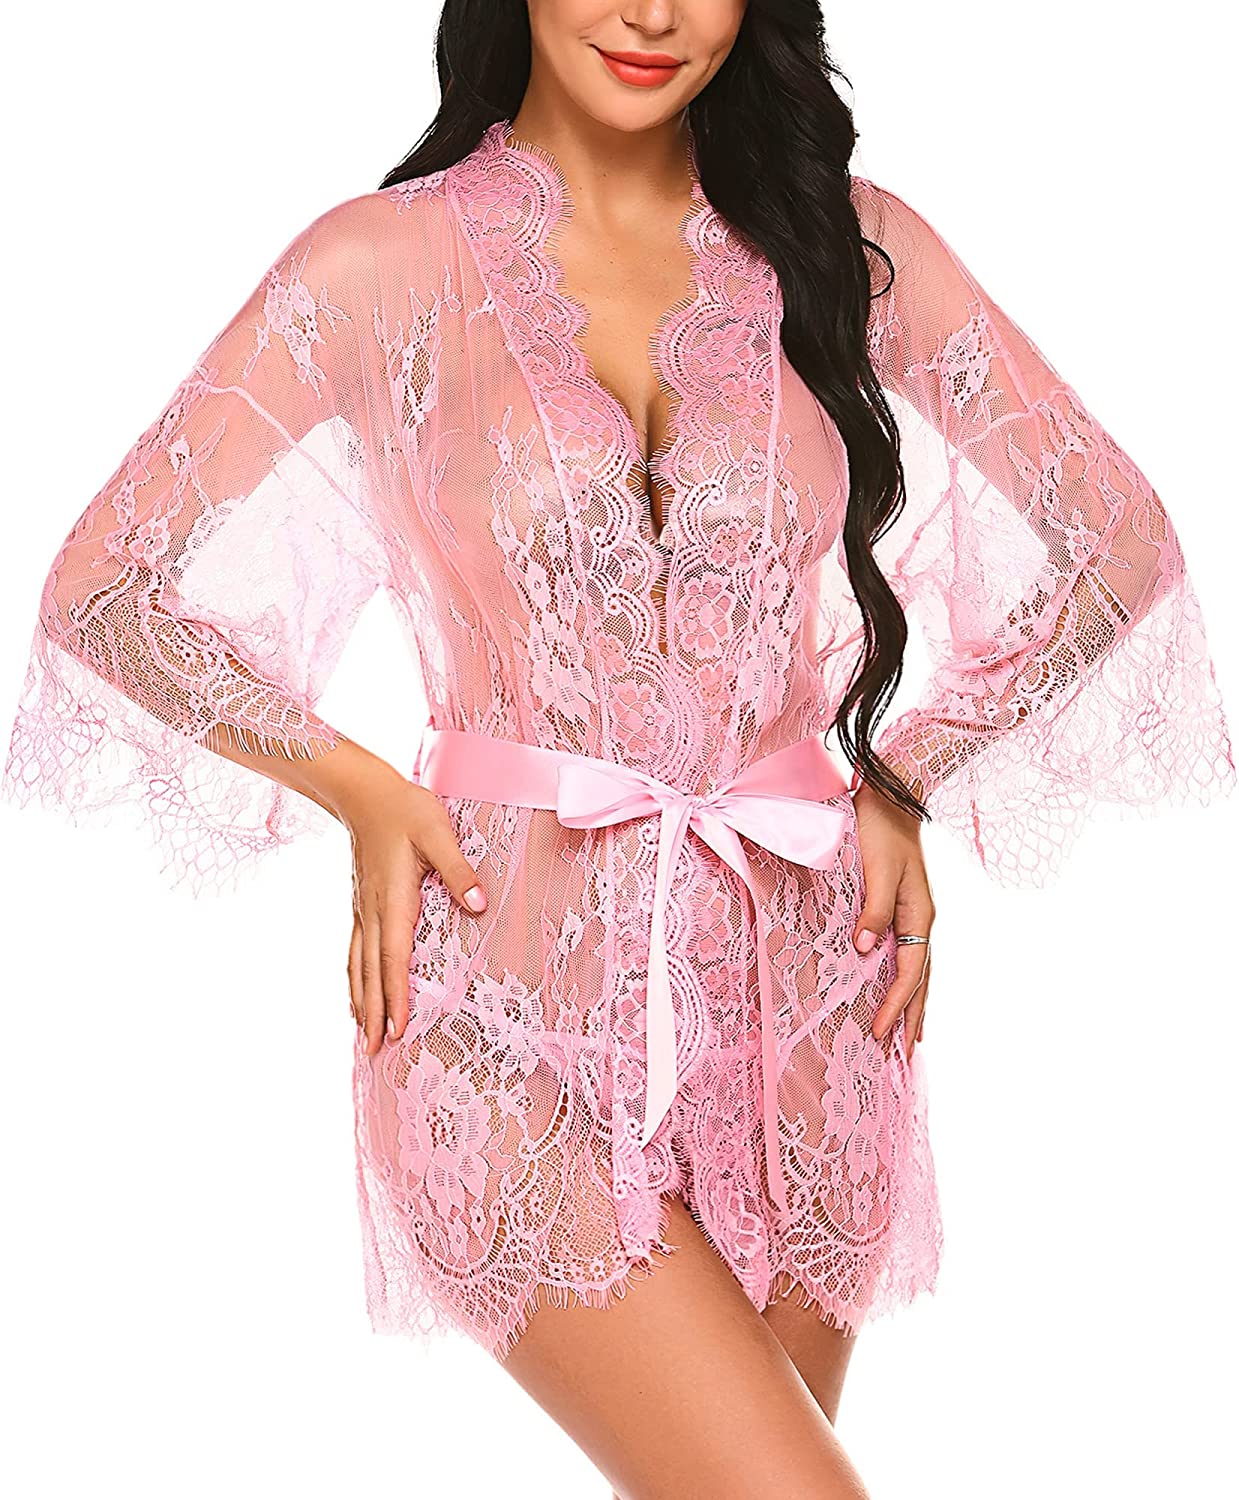 Buy FASHION BONES Baby Doll Nightwear Robe, Kimono Lingerie, Negligee